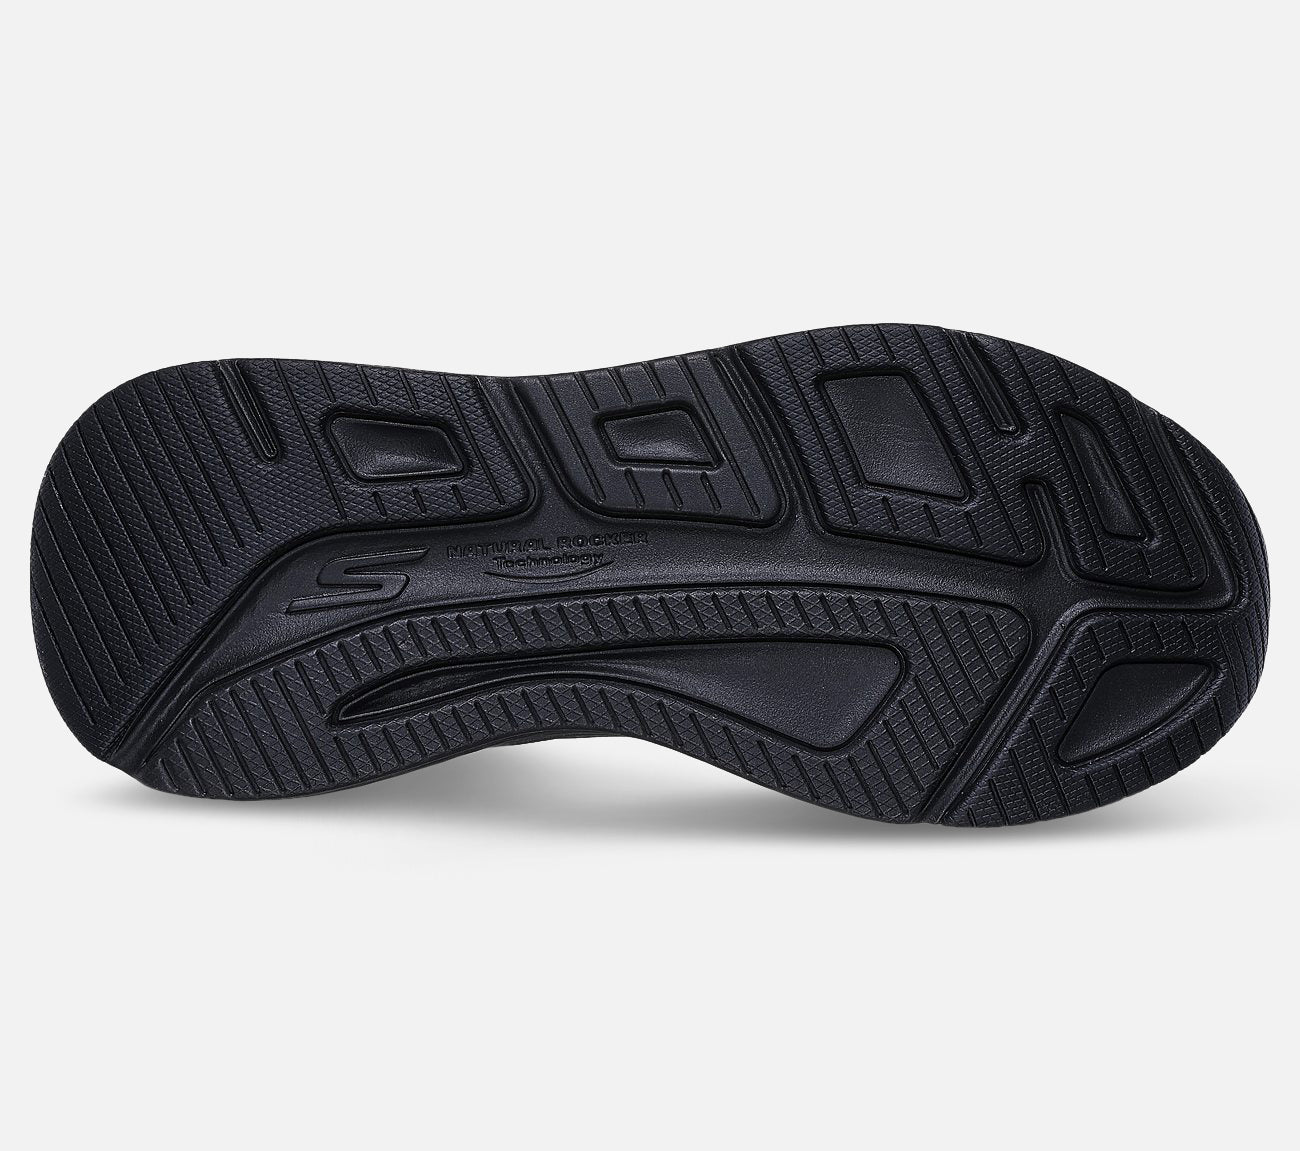 Max Cushioning Elite 2.0 - Levitate Shoe Skechers